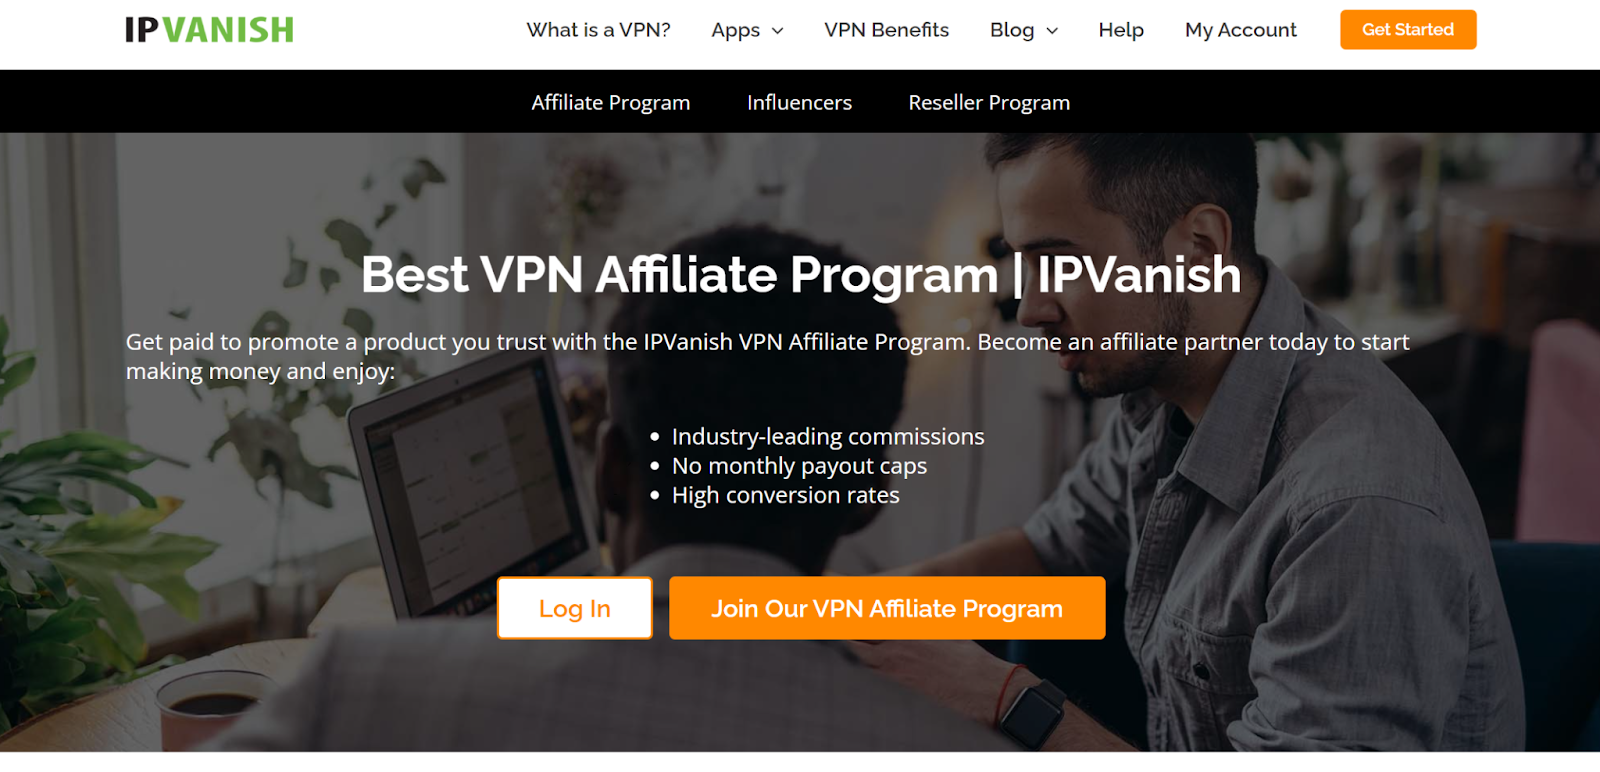 Ipvanish affiliate program website home page